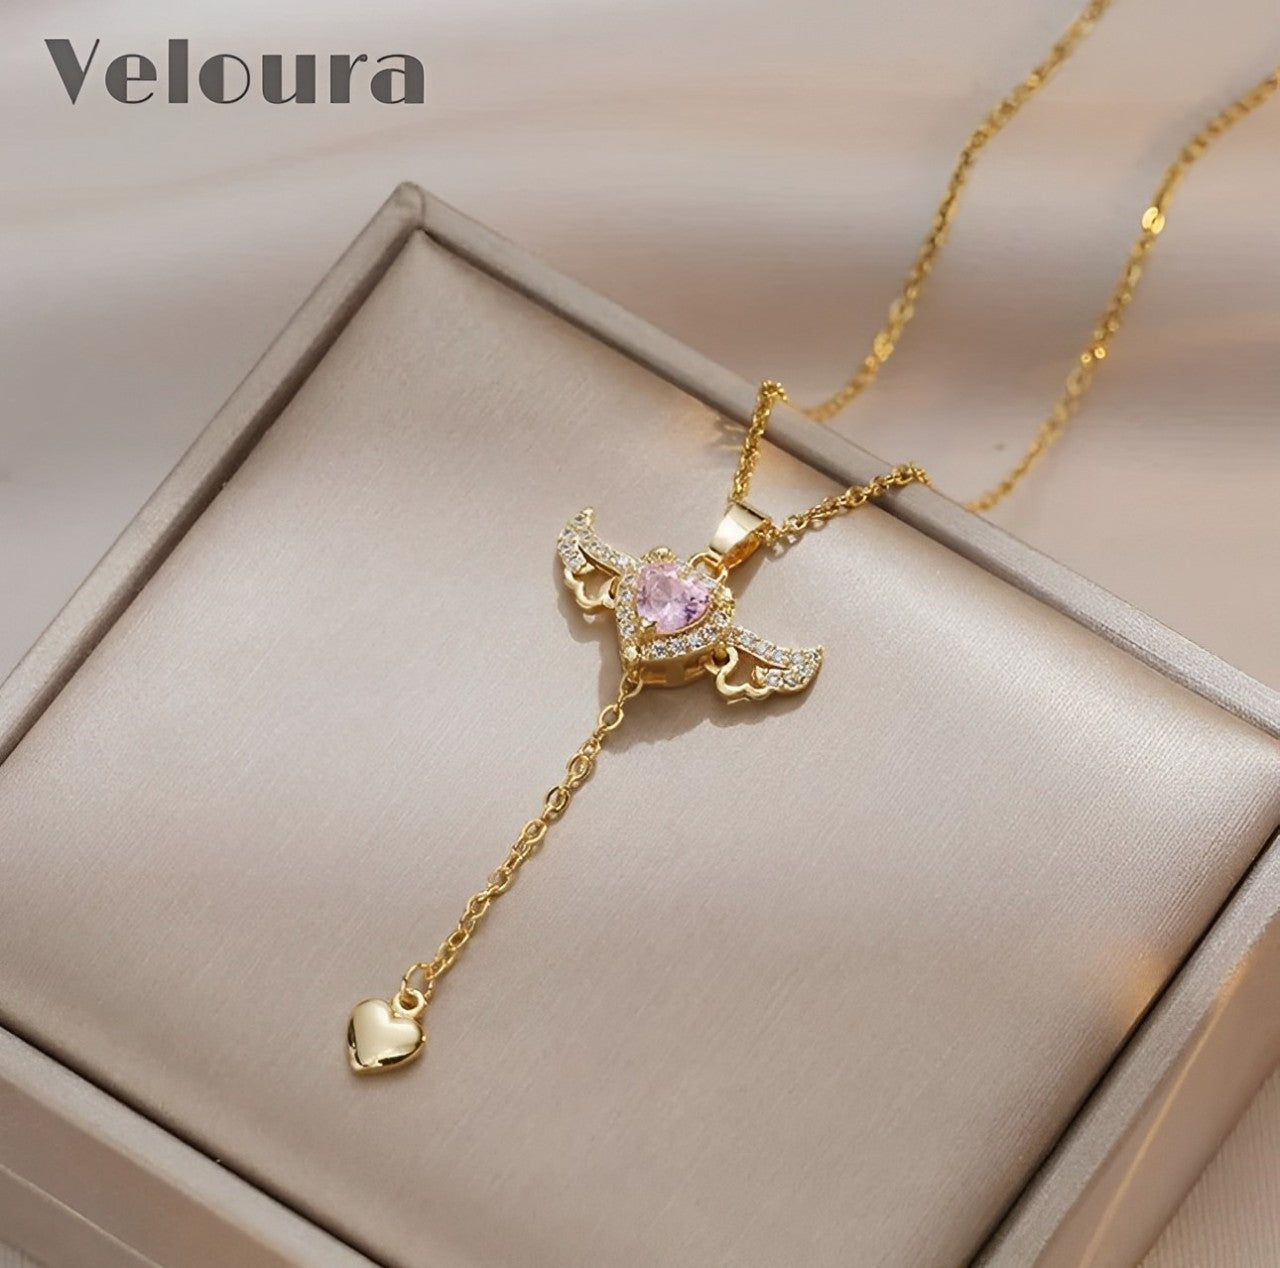 Veloura™ Heart Wings Necklace